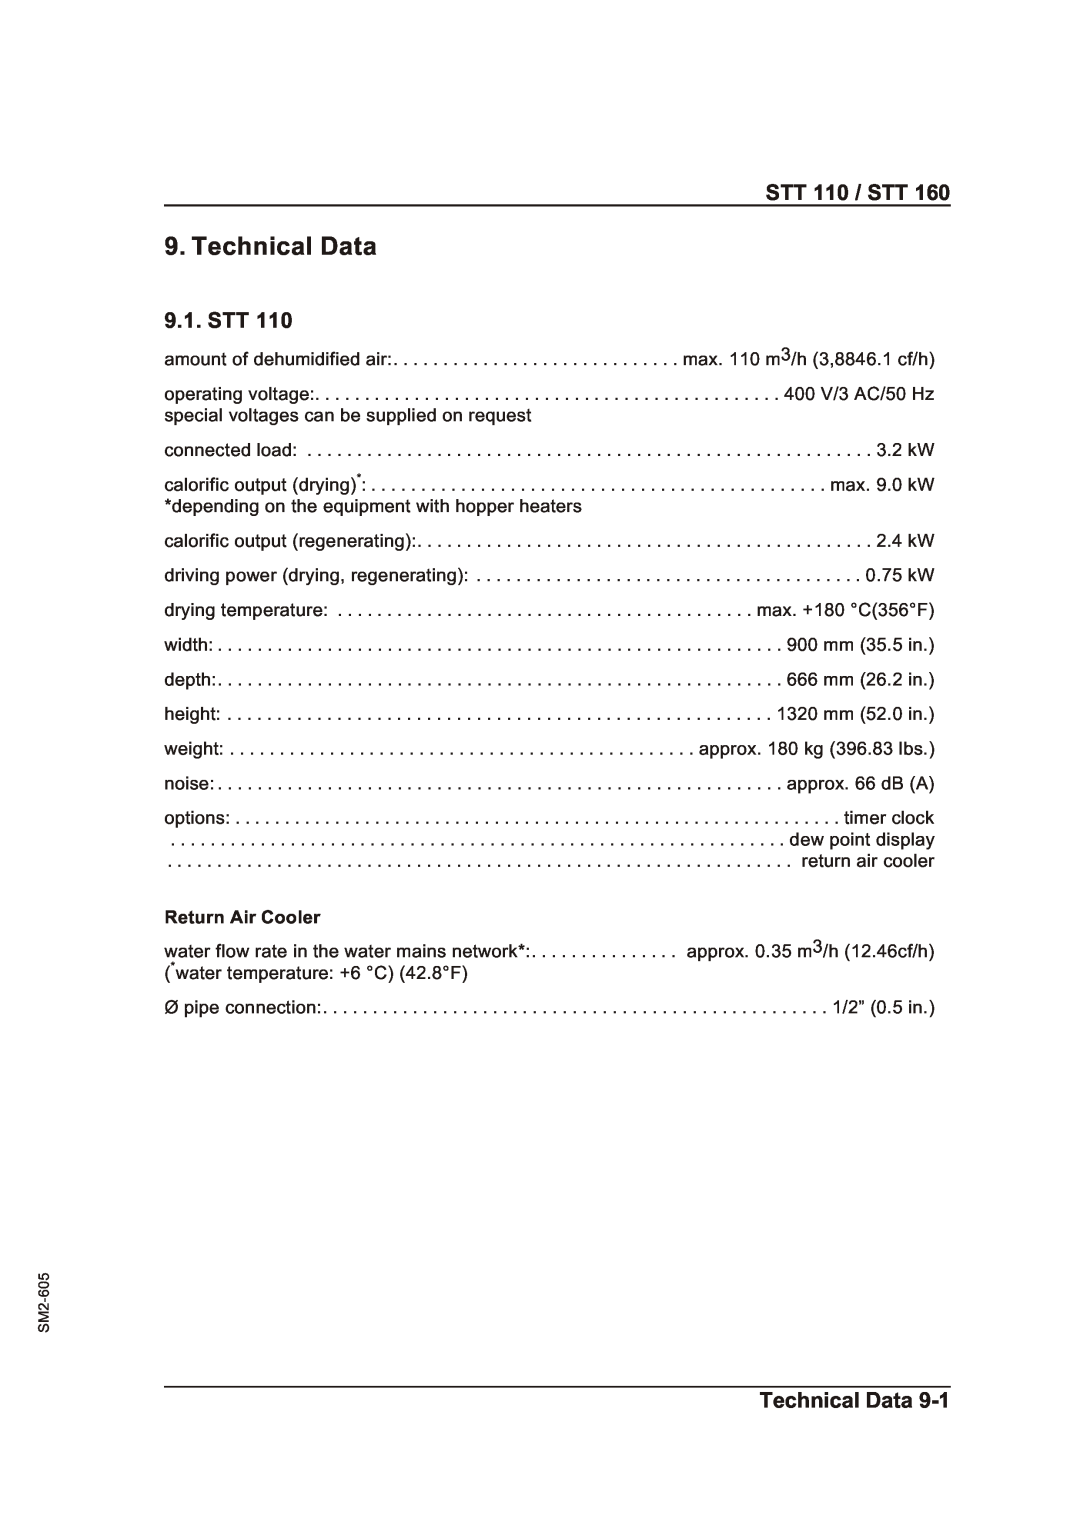 Sterling STT 160 manual Technical Data, Stt, STT 110 / STT 